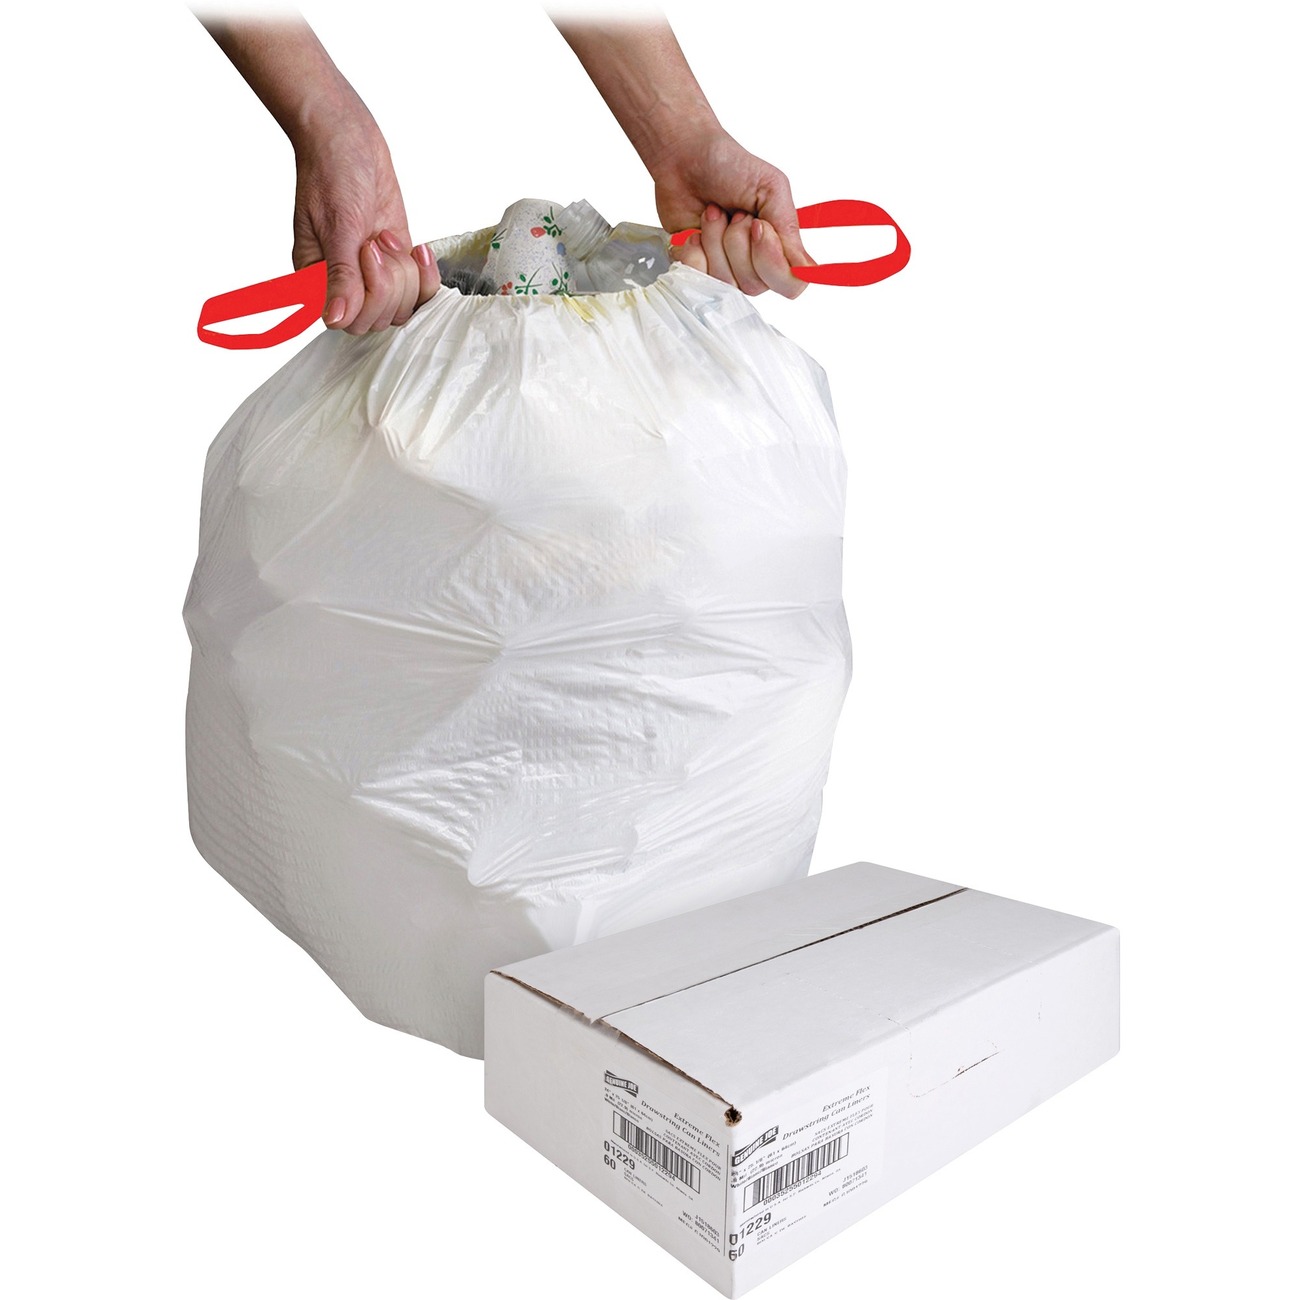 Great Value 8-Gallon Drawstring Medium Trash Bags, Fresh Cotton, 40 Bags 